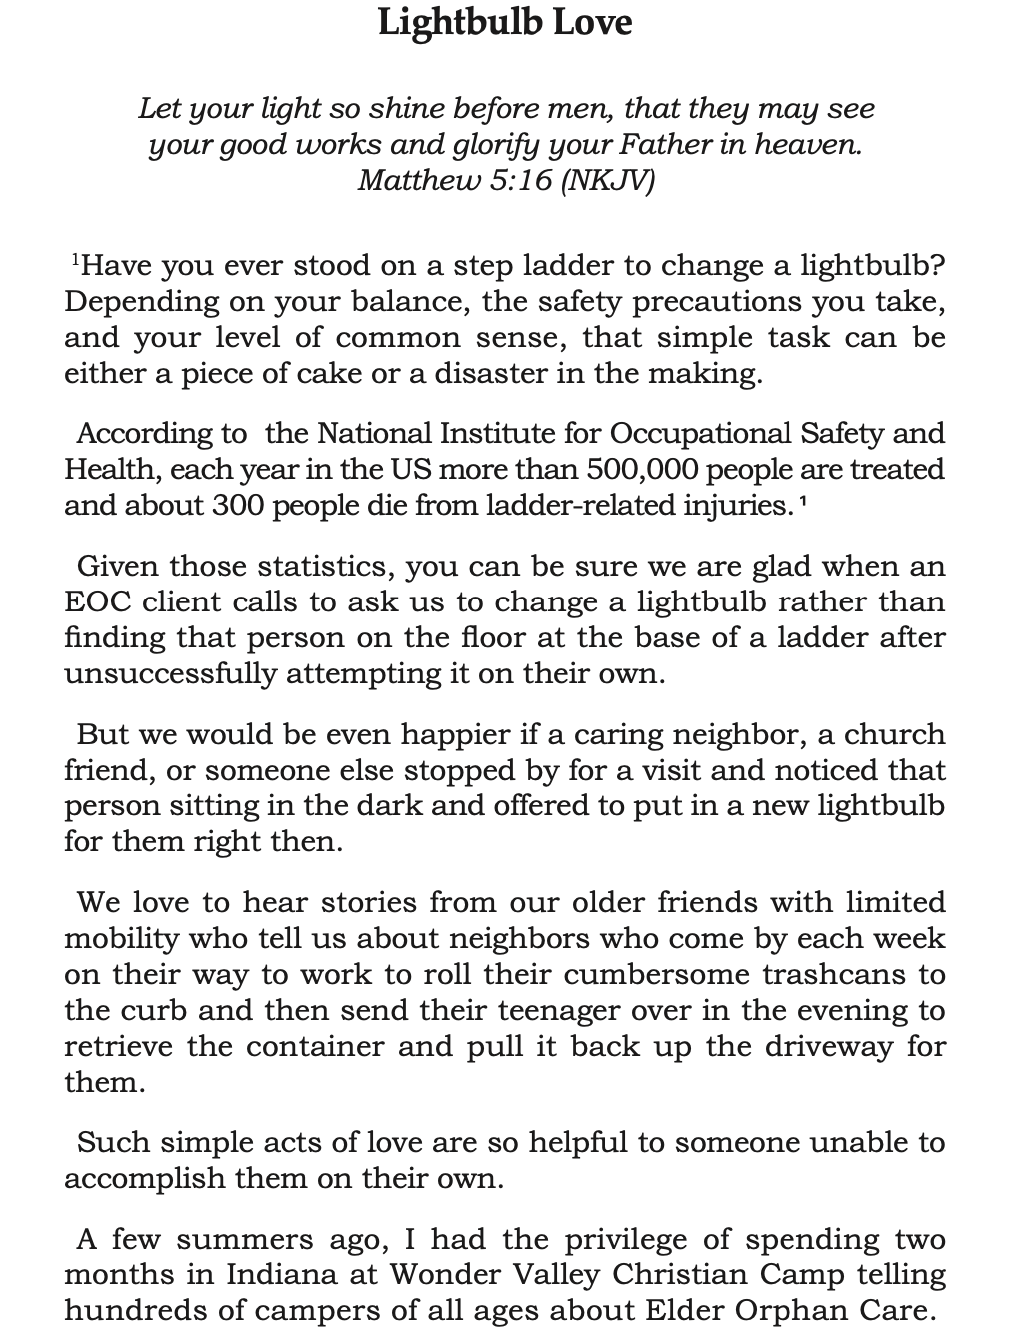 Light Bulb Love story gives dozens of ideas for loving older neighbors Page 1